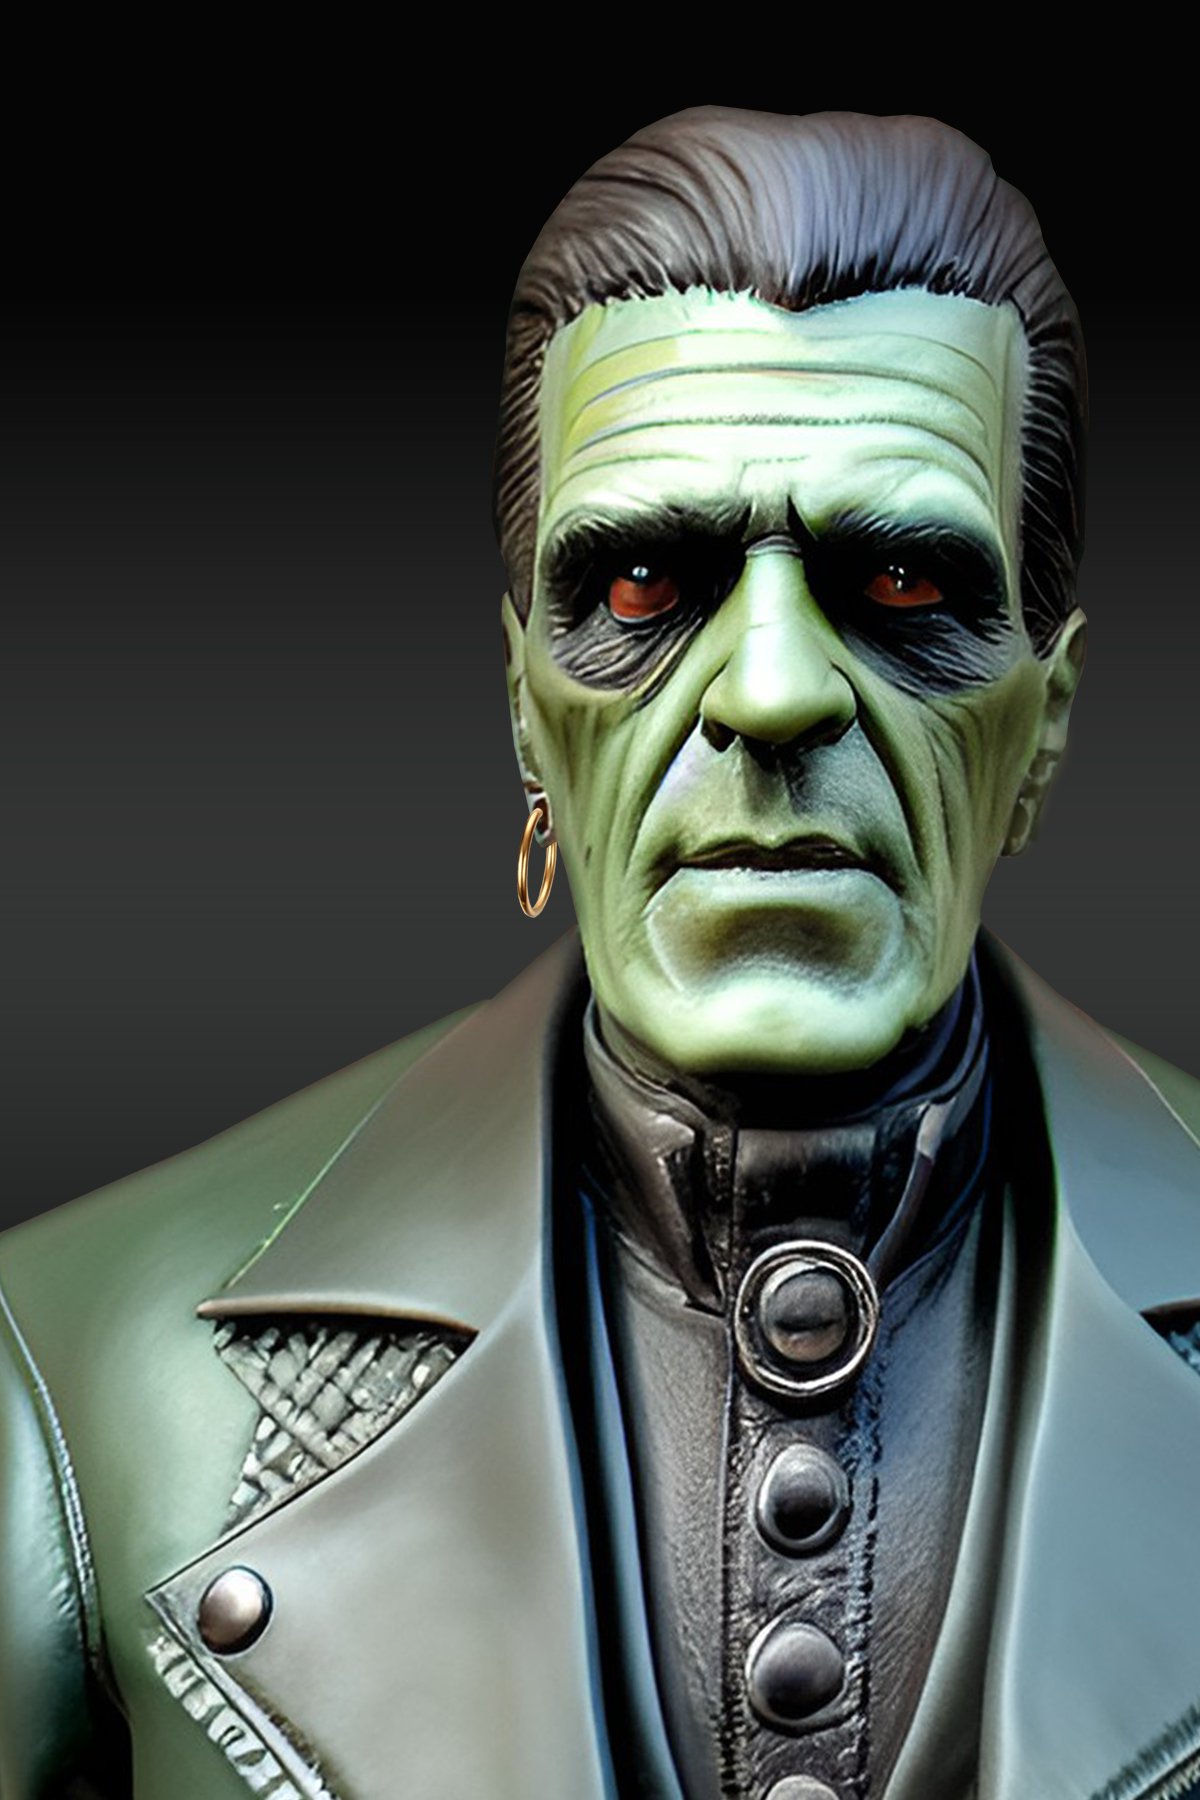 Frankenstein image in green